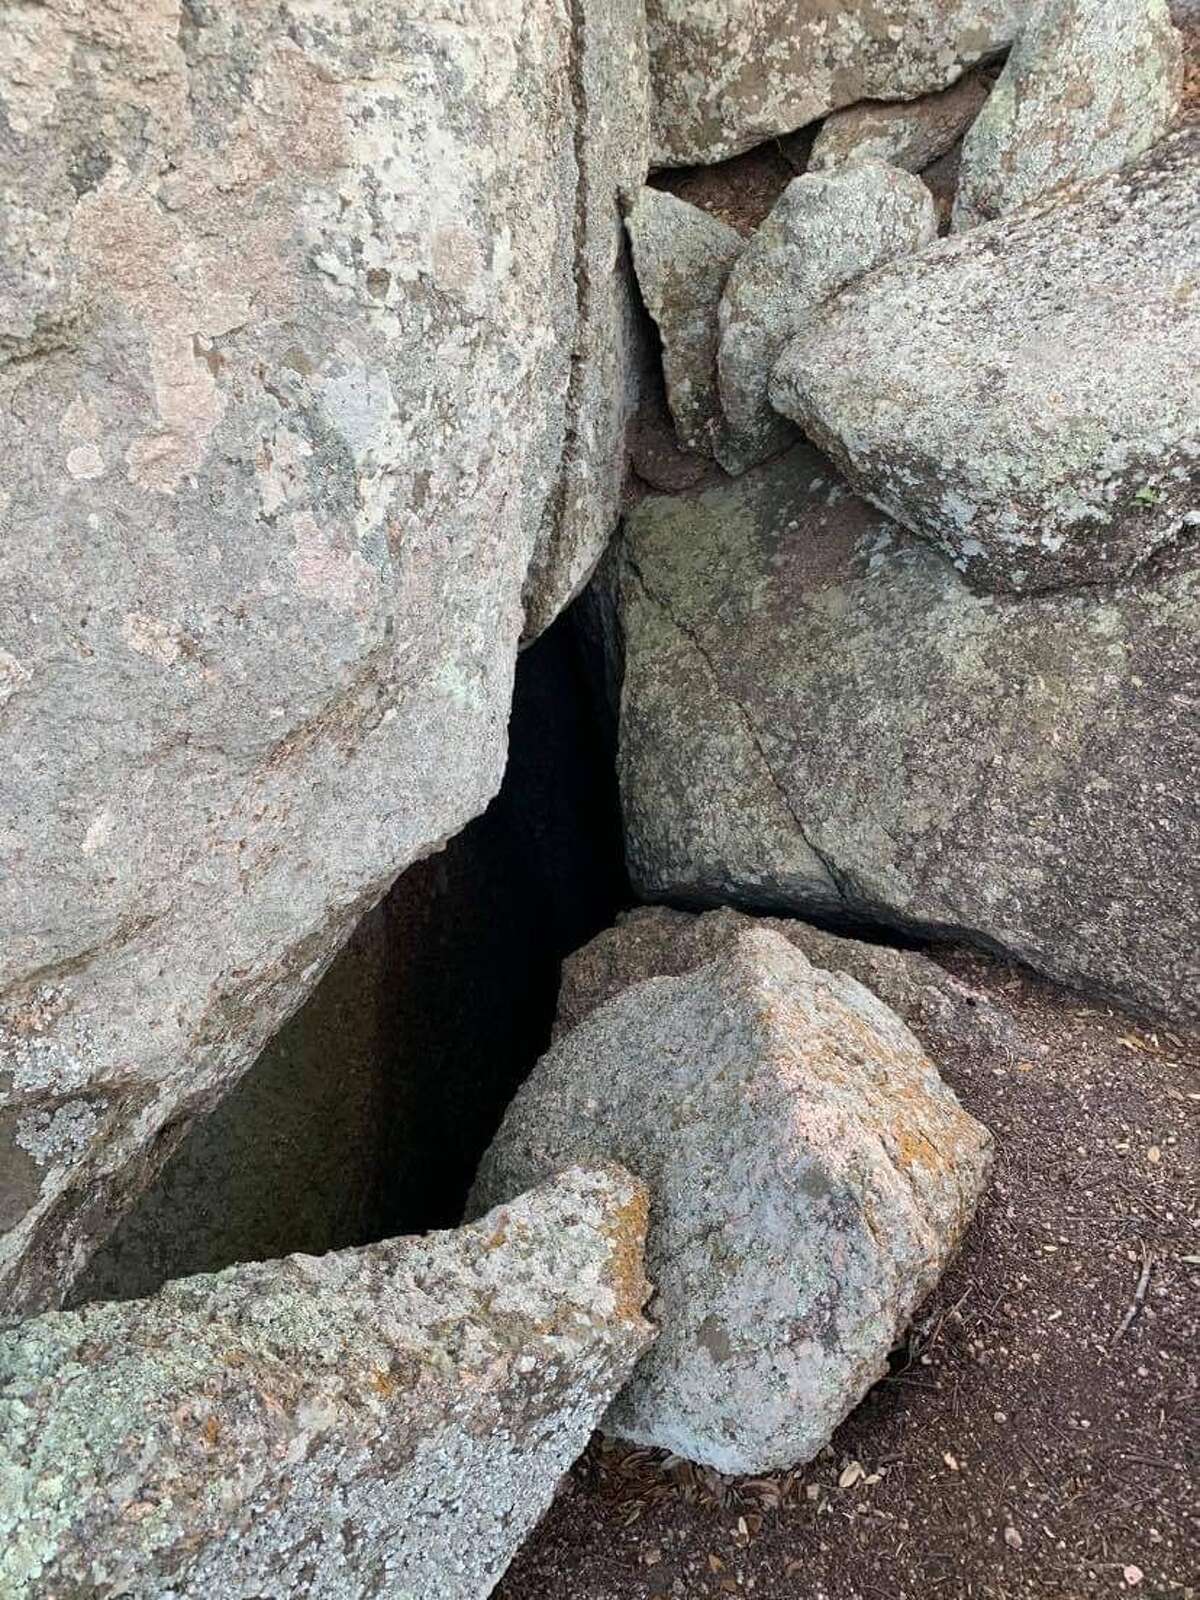 The hidden gem cave at Enchanted Rock State Park.